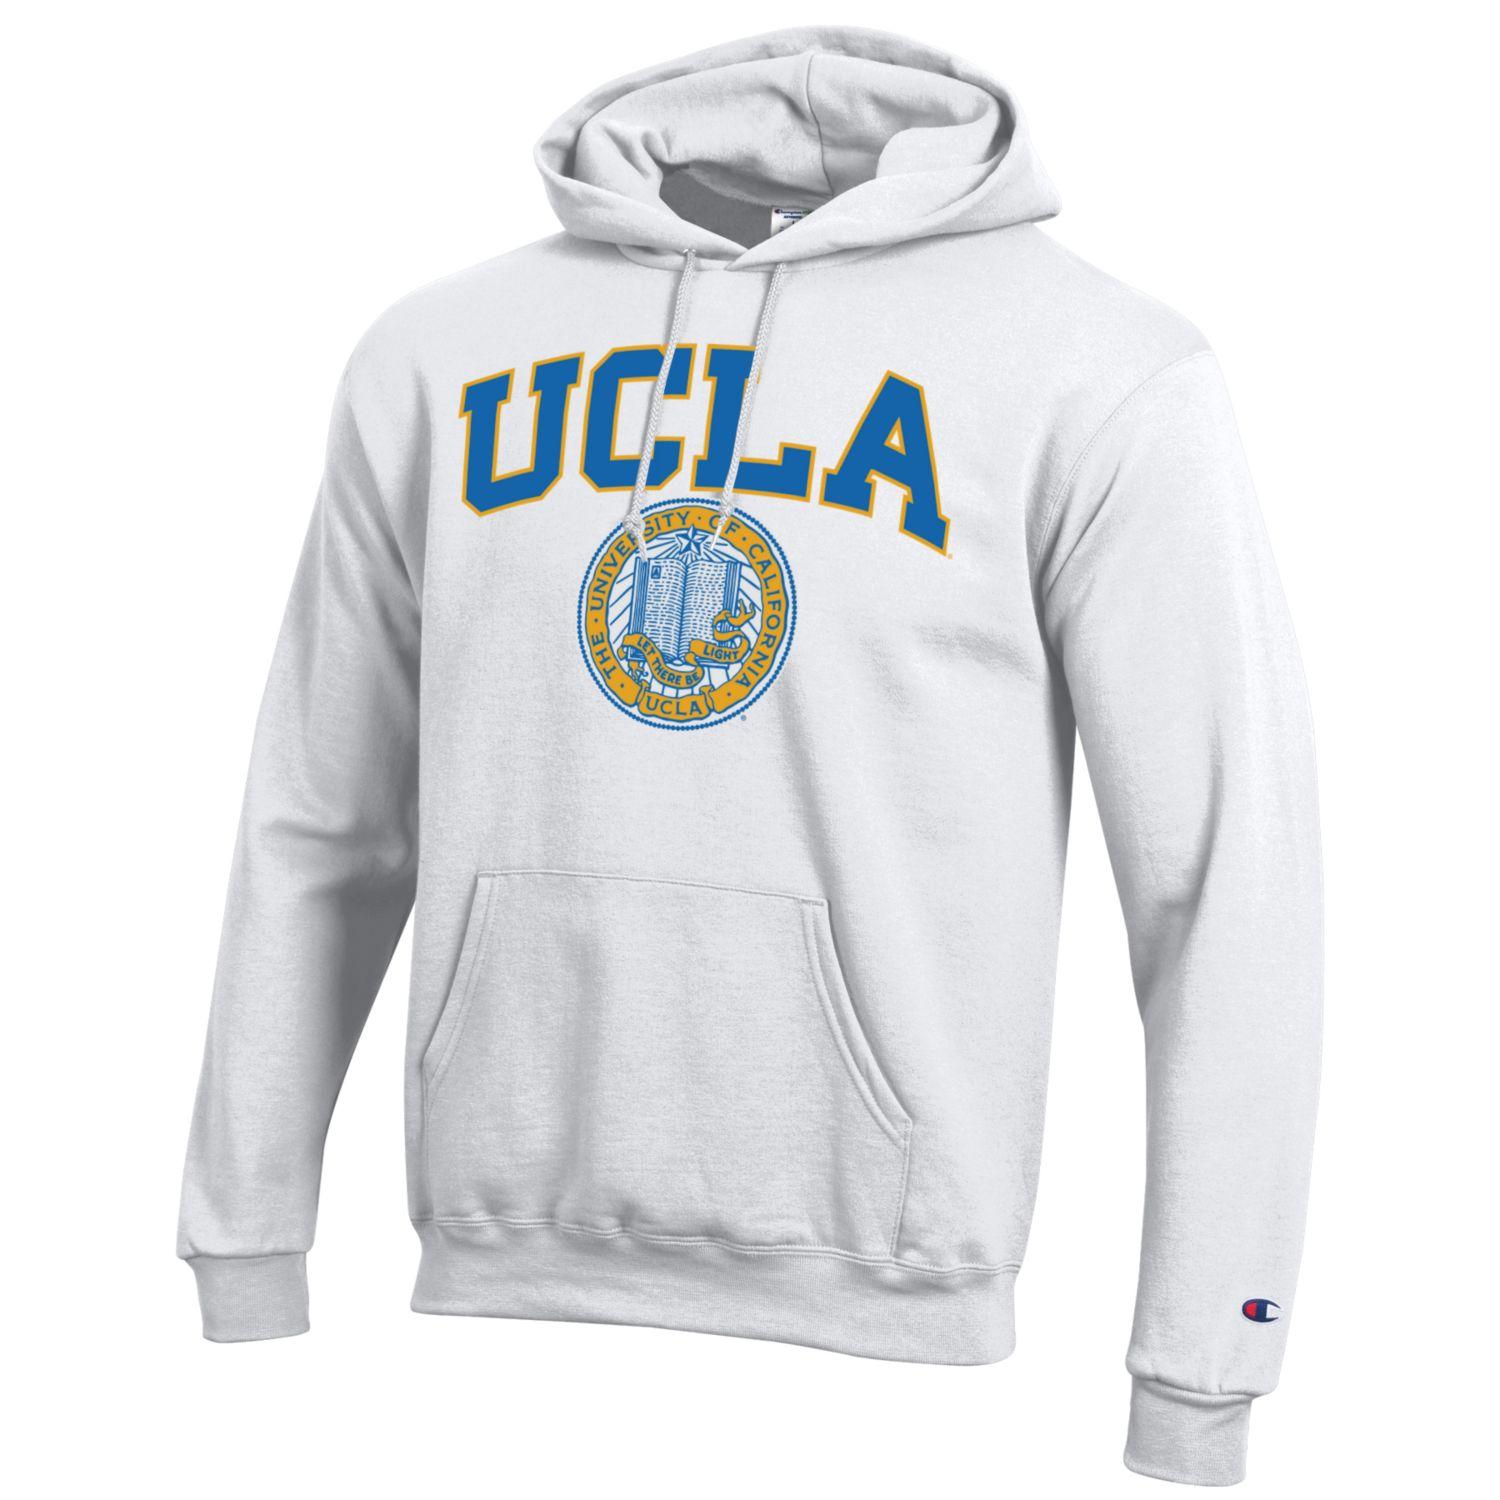 ucla champion hoodie